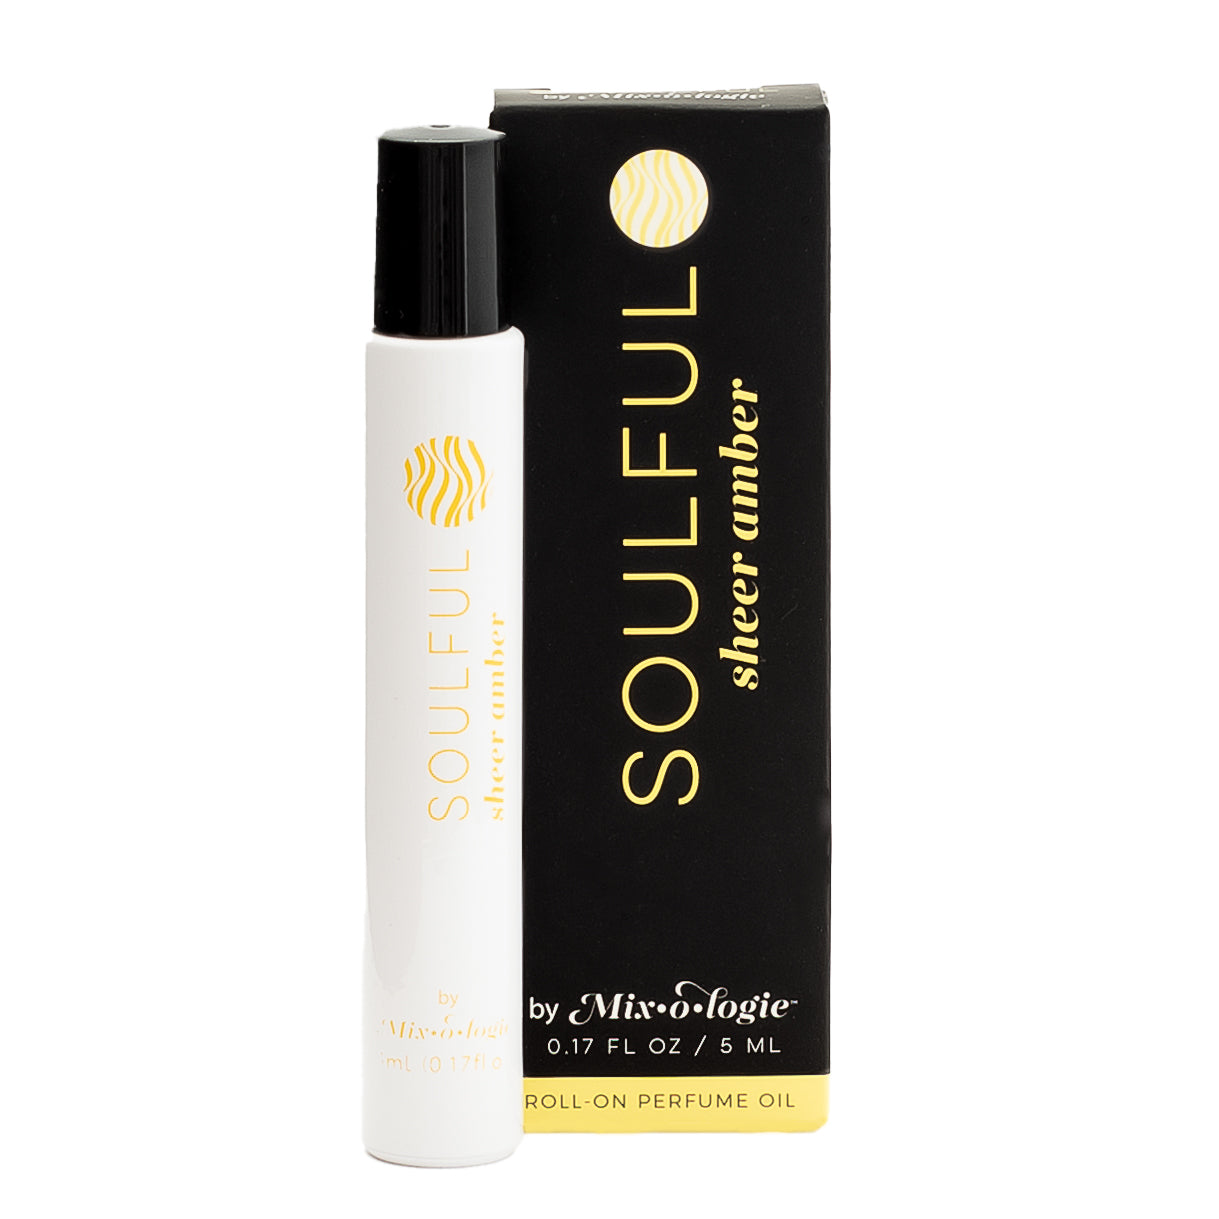 Soulful (sheer amber) - Perfume Oil Rollerball (5 mL)